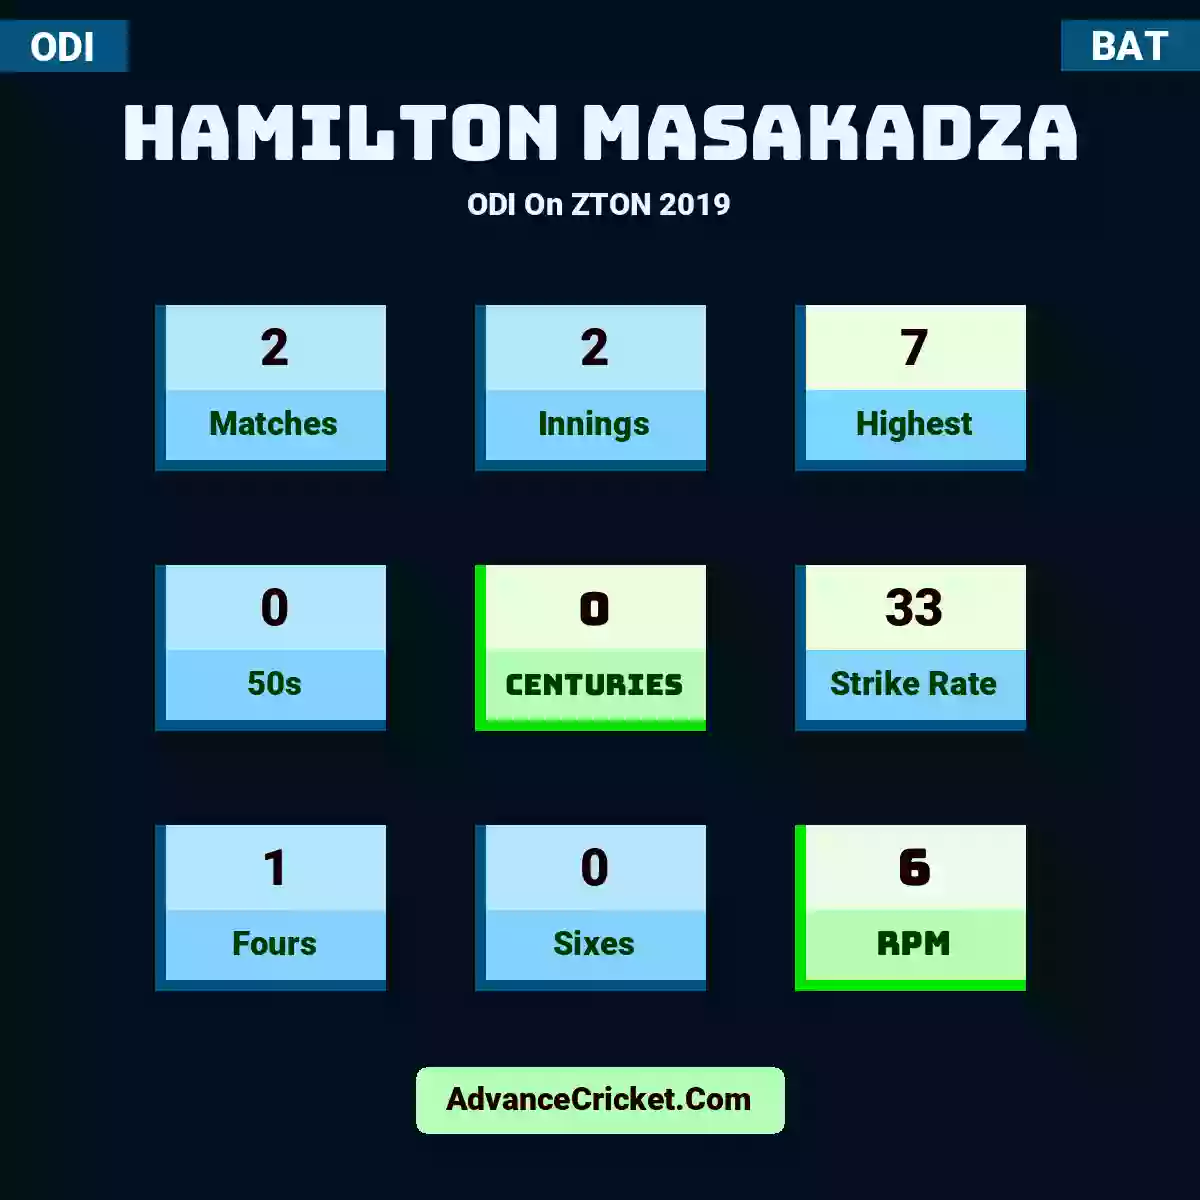 Hamilton Masakadza ODI  On ZTON 2019, Hamilton Masakadza played 2 matches, scored 7 runs as highest, 0 half-centuries, and 0 centuries, with a strike rate of 33. H.Masakadza hit 1 fours and 0 sixes, with an RPM of 6.